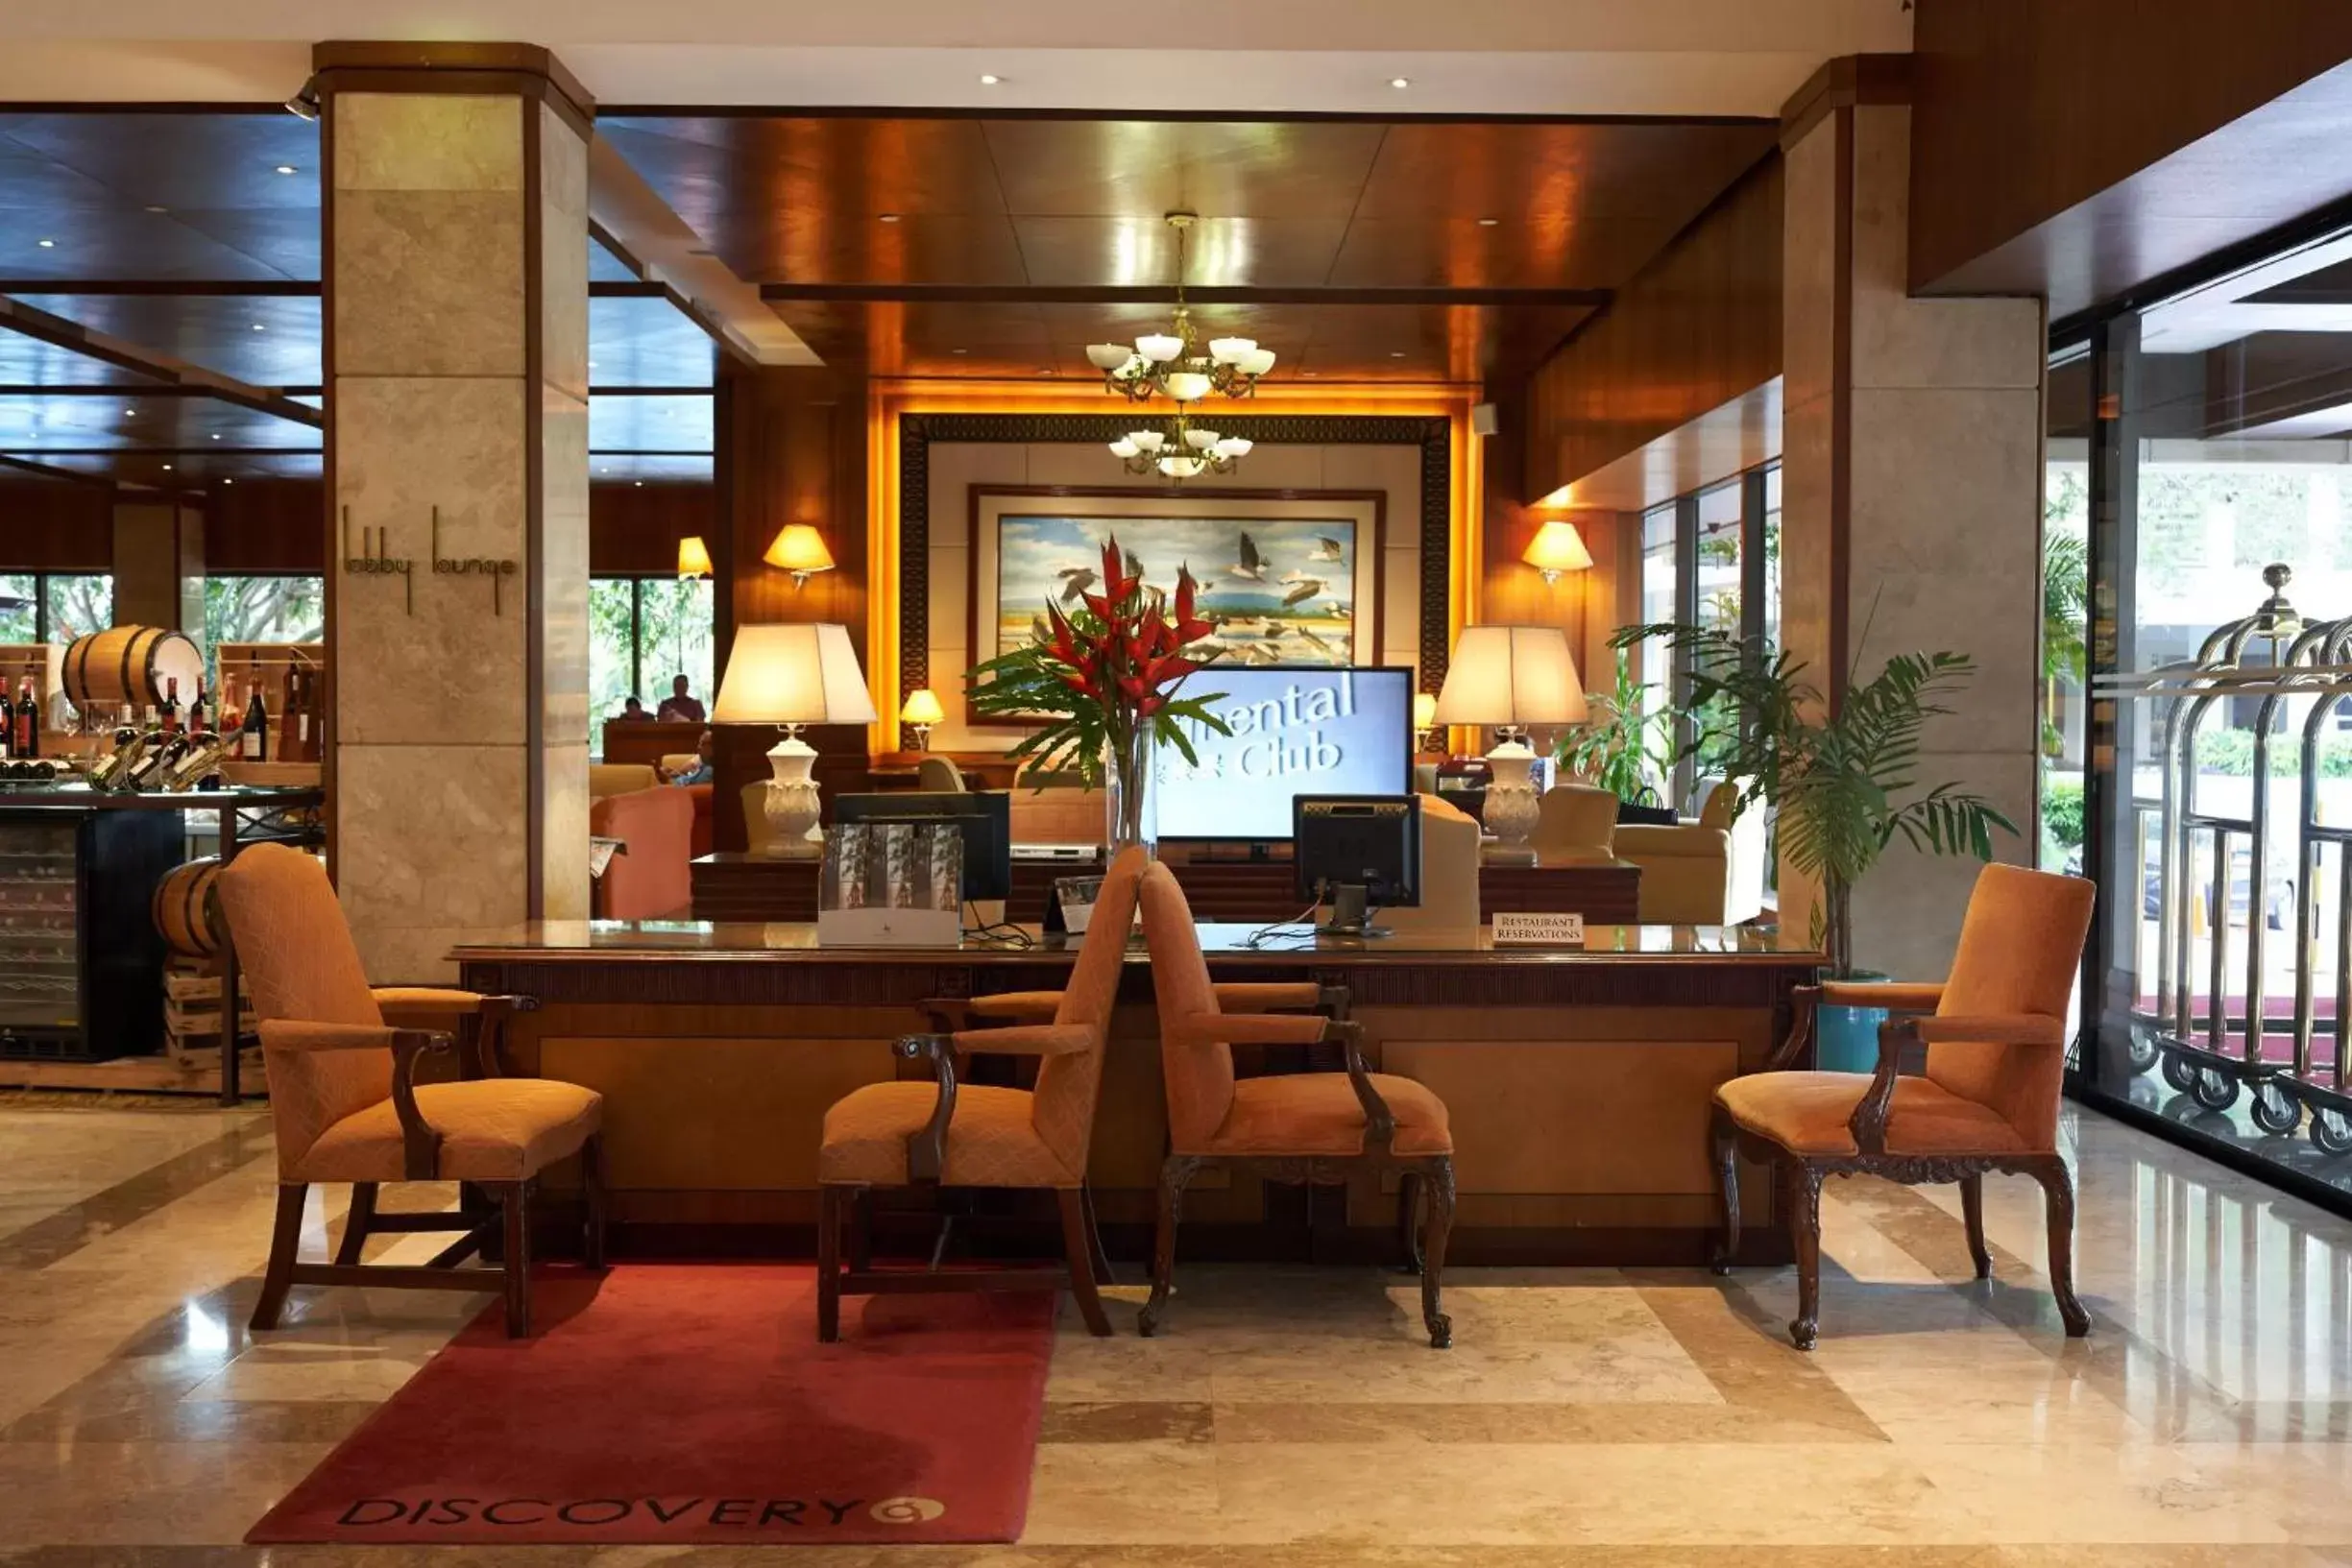 Lobby or reception in Marco Polo Plaza Cebu